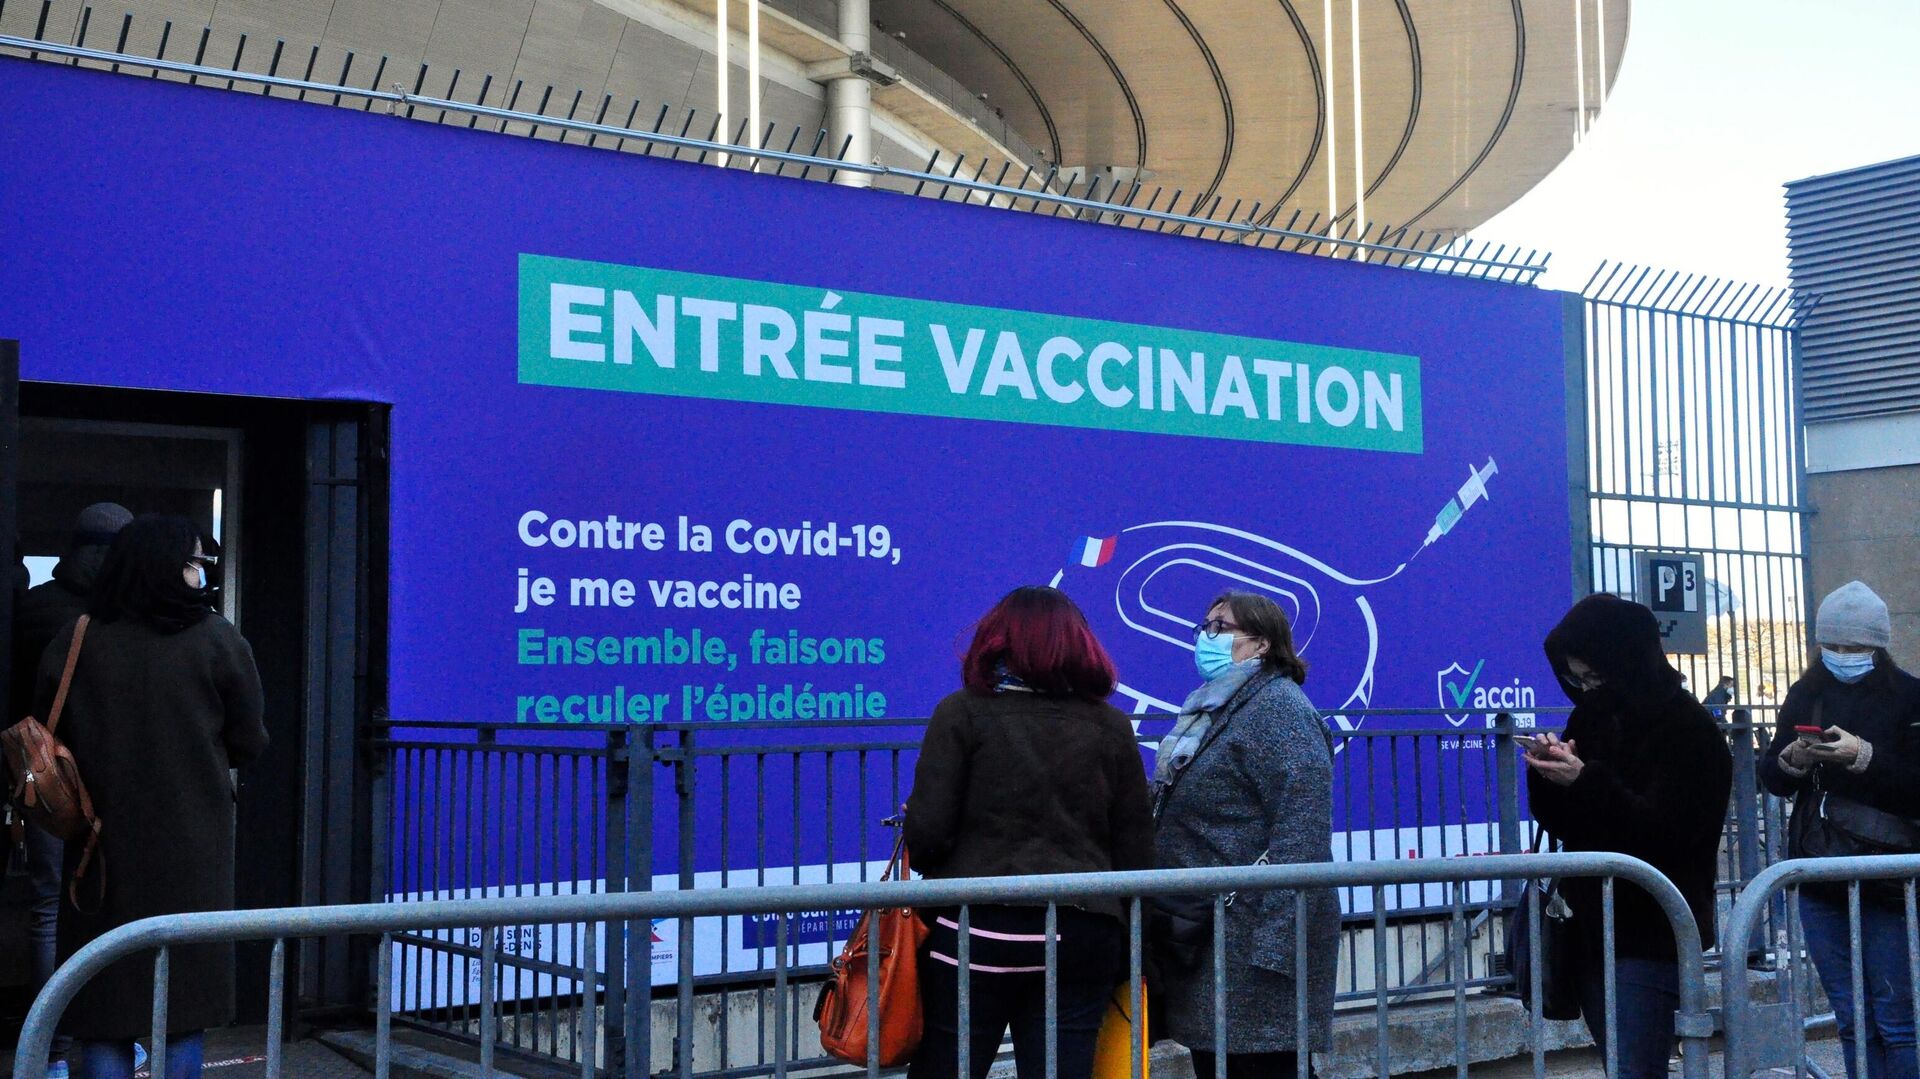 Местные жители стоят в очереди на вакцинацию от коронавируса в центре вакцинодроме на стадионе Стад де Франс - РИА Новости, 1920, 31.08.2021